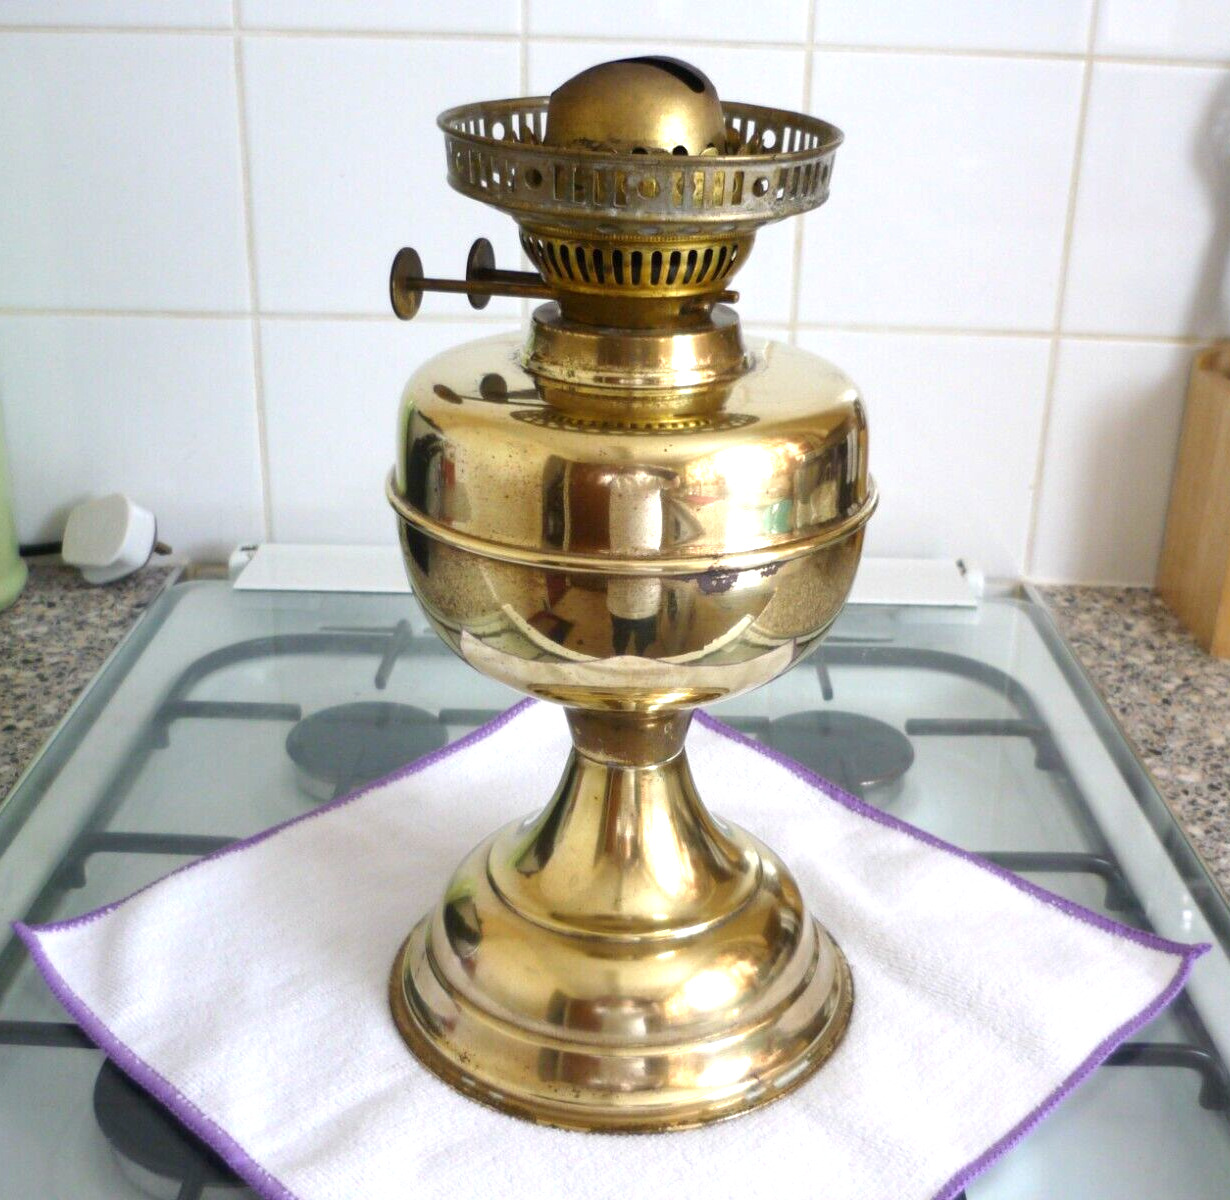 Vintage Original Brass Oil Lamp Base With Duplex {SHS} Burner Working Condition.